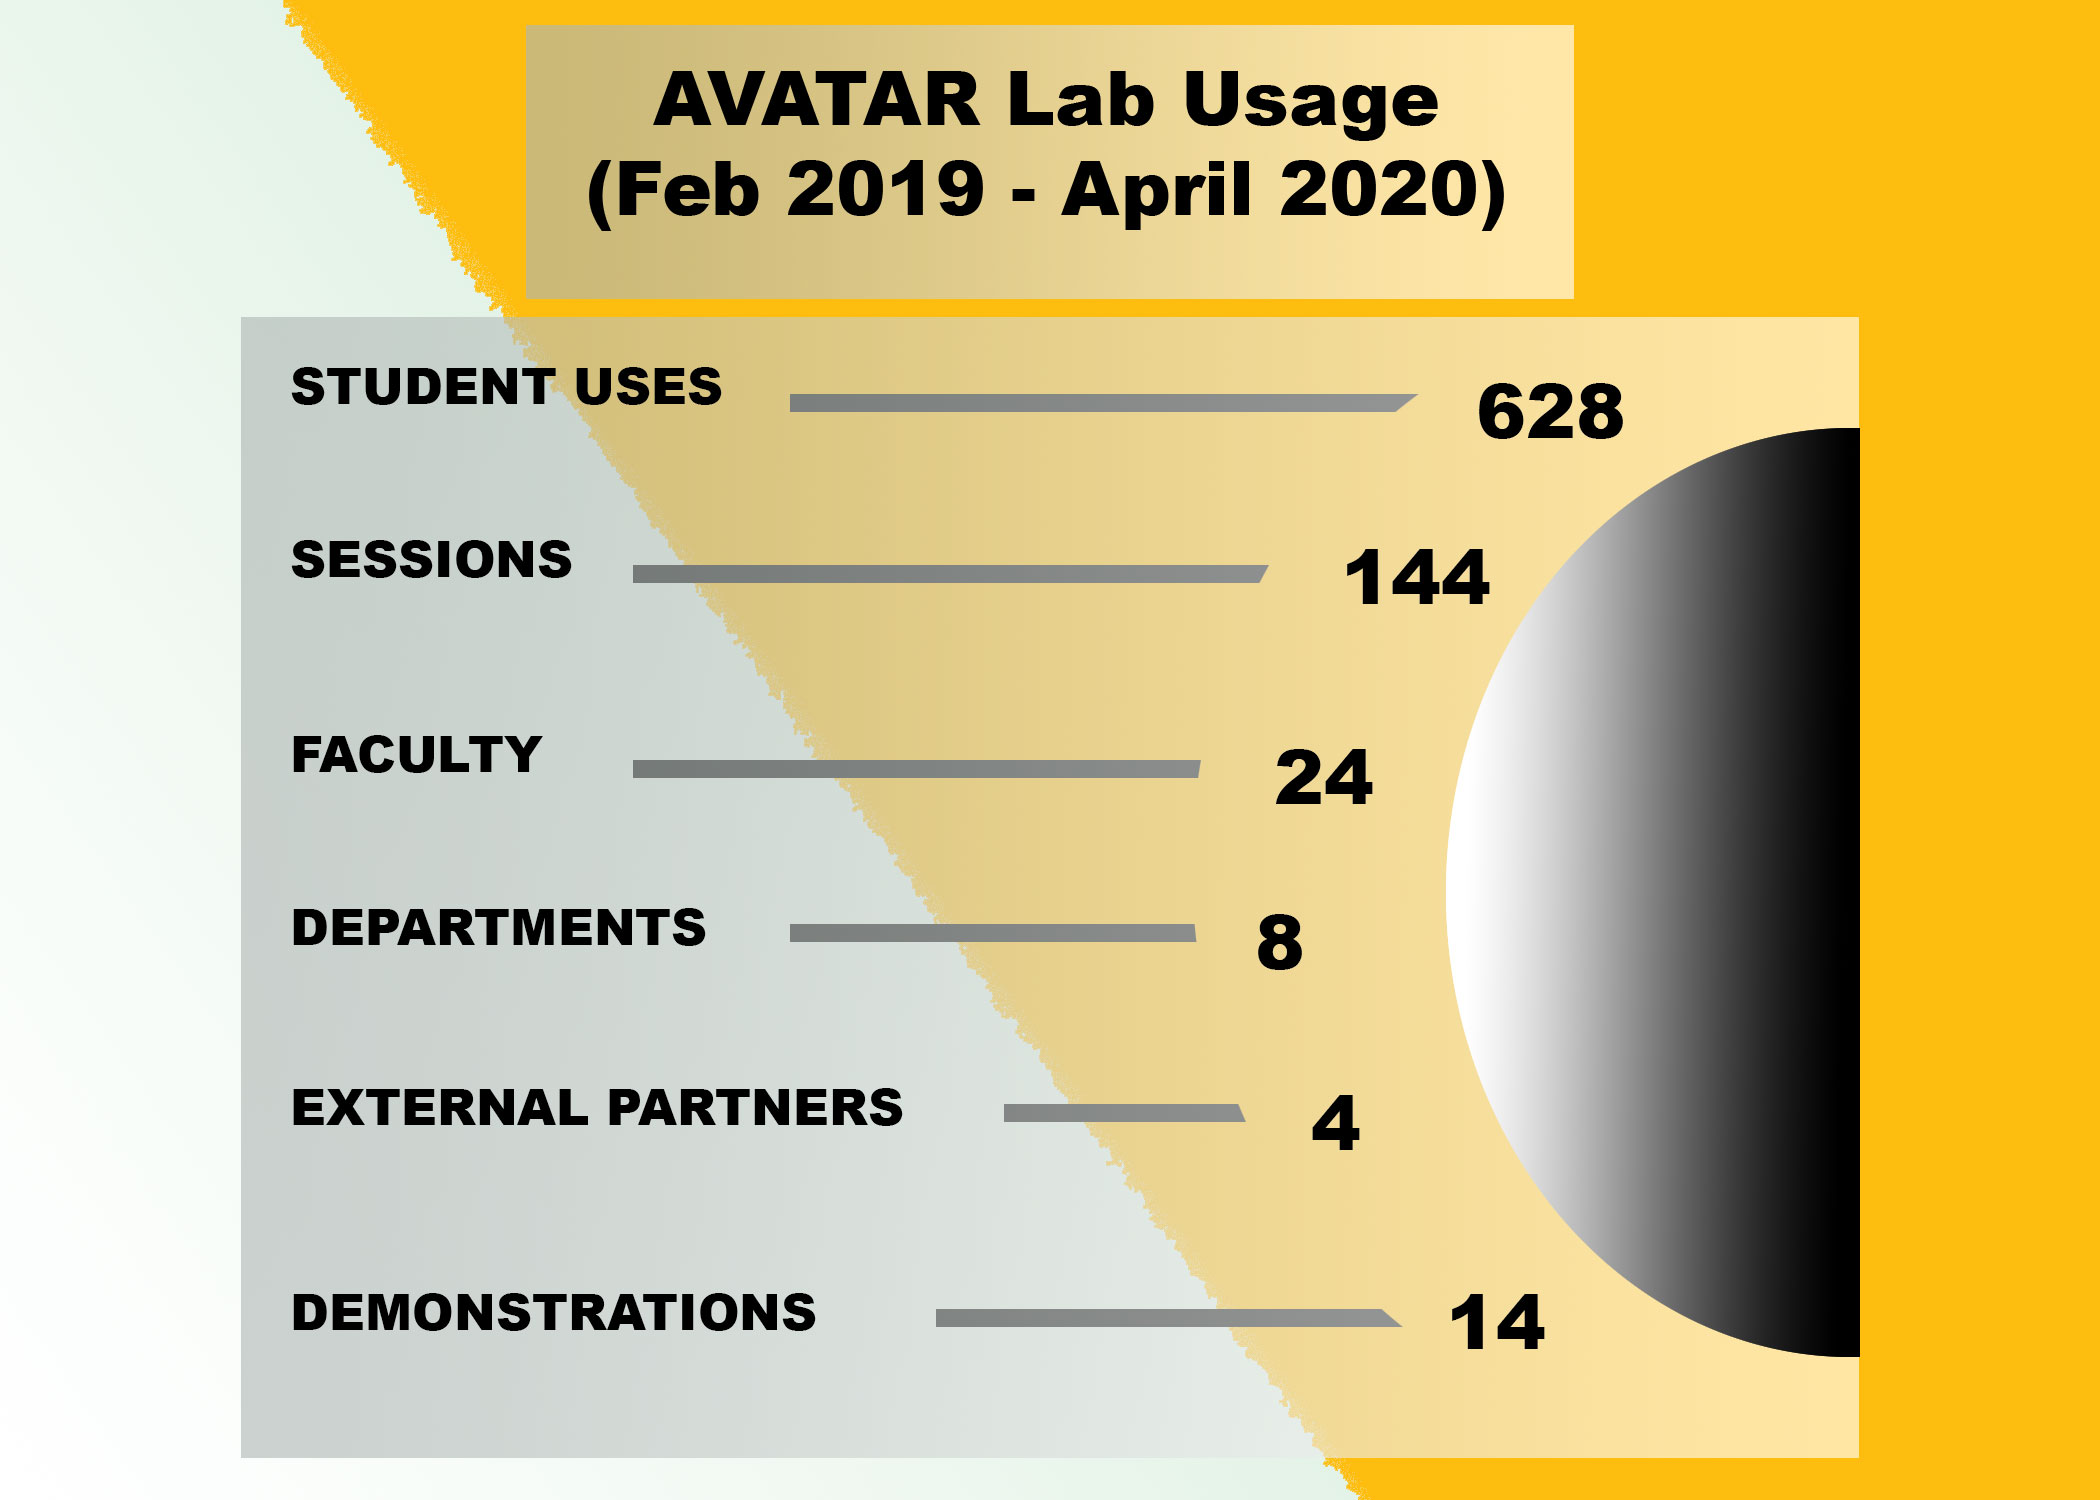 AVATAR Lab Usage Infographic